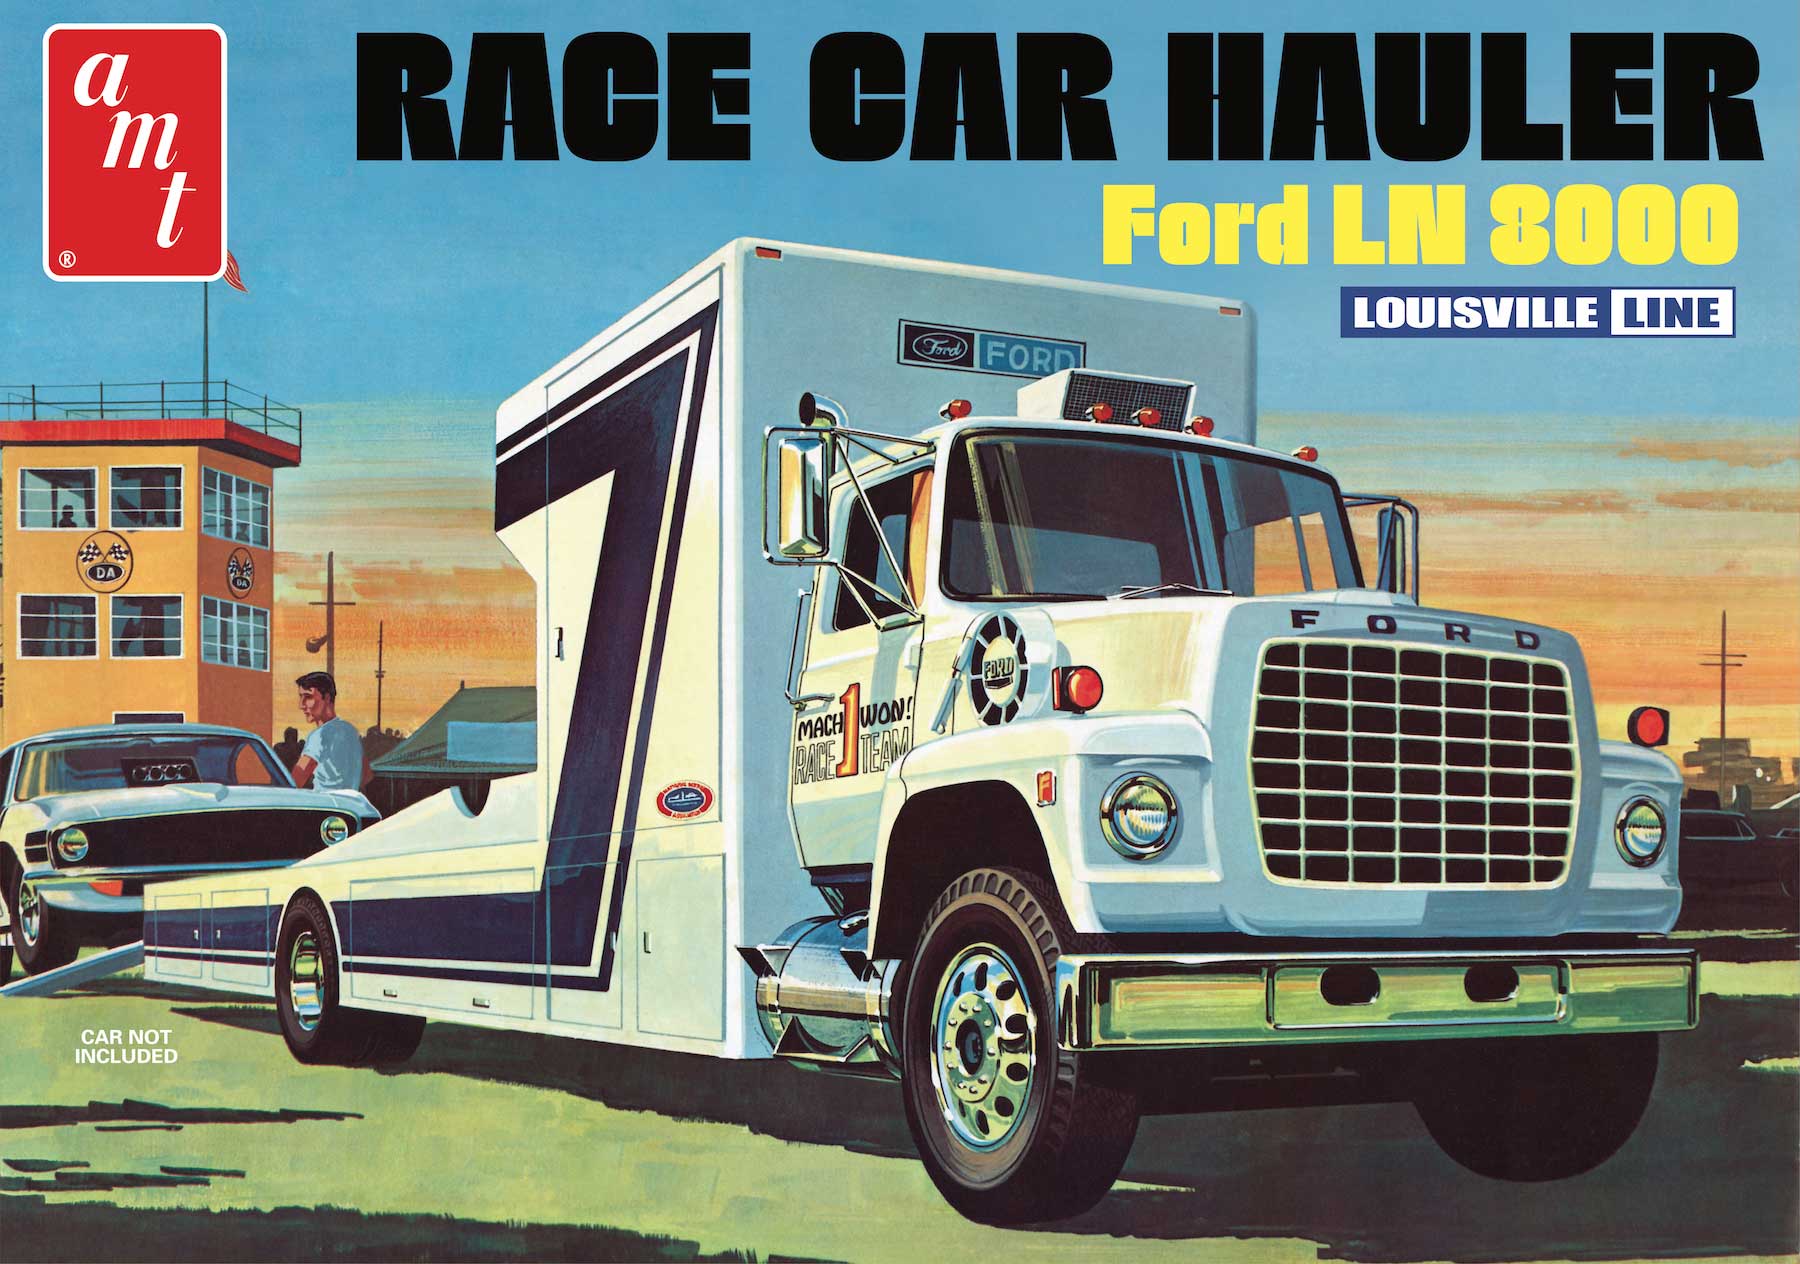 Ford LN8000 Race Car Hauler